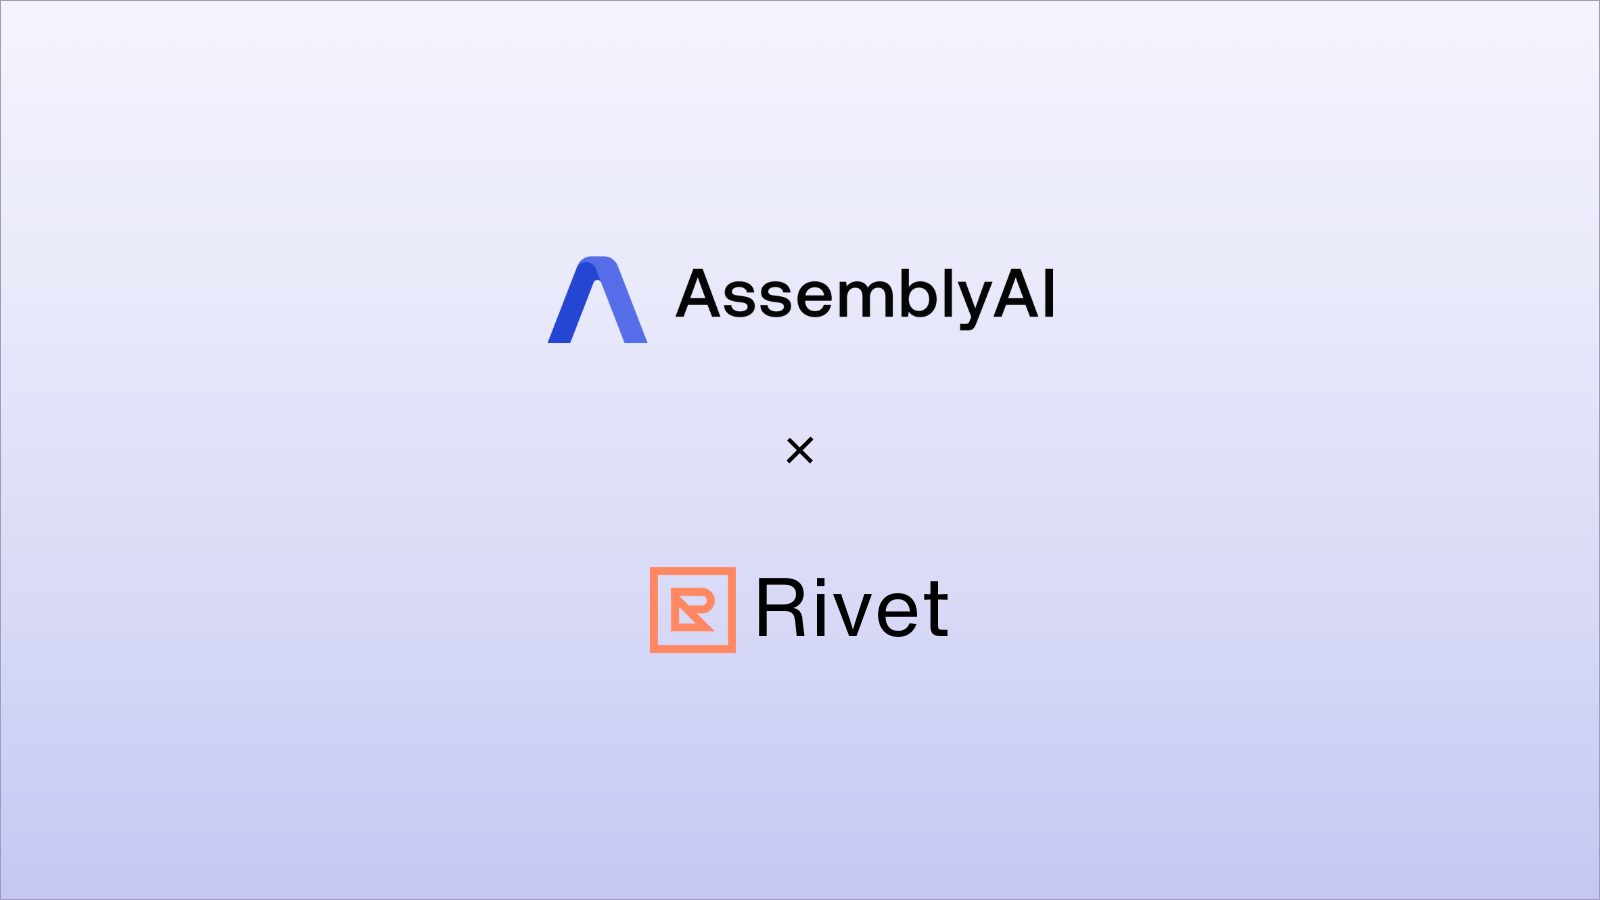 AssemblyAI logo and Rivet logo